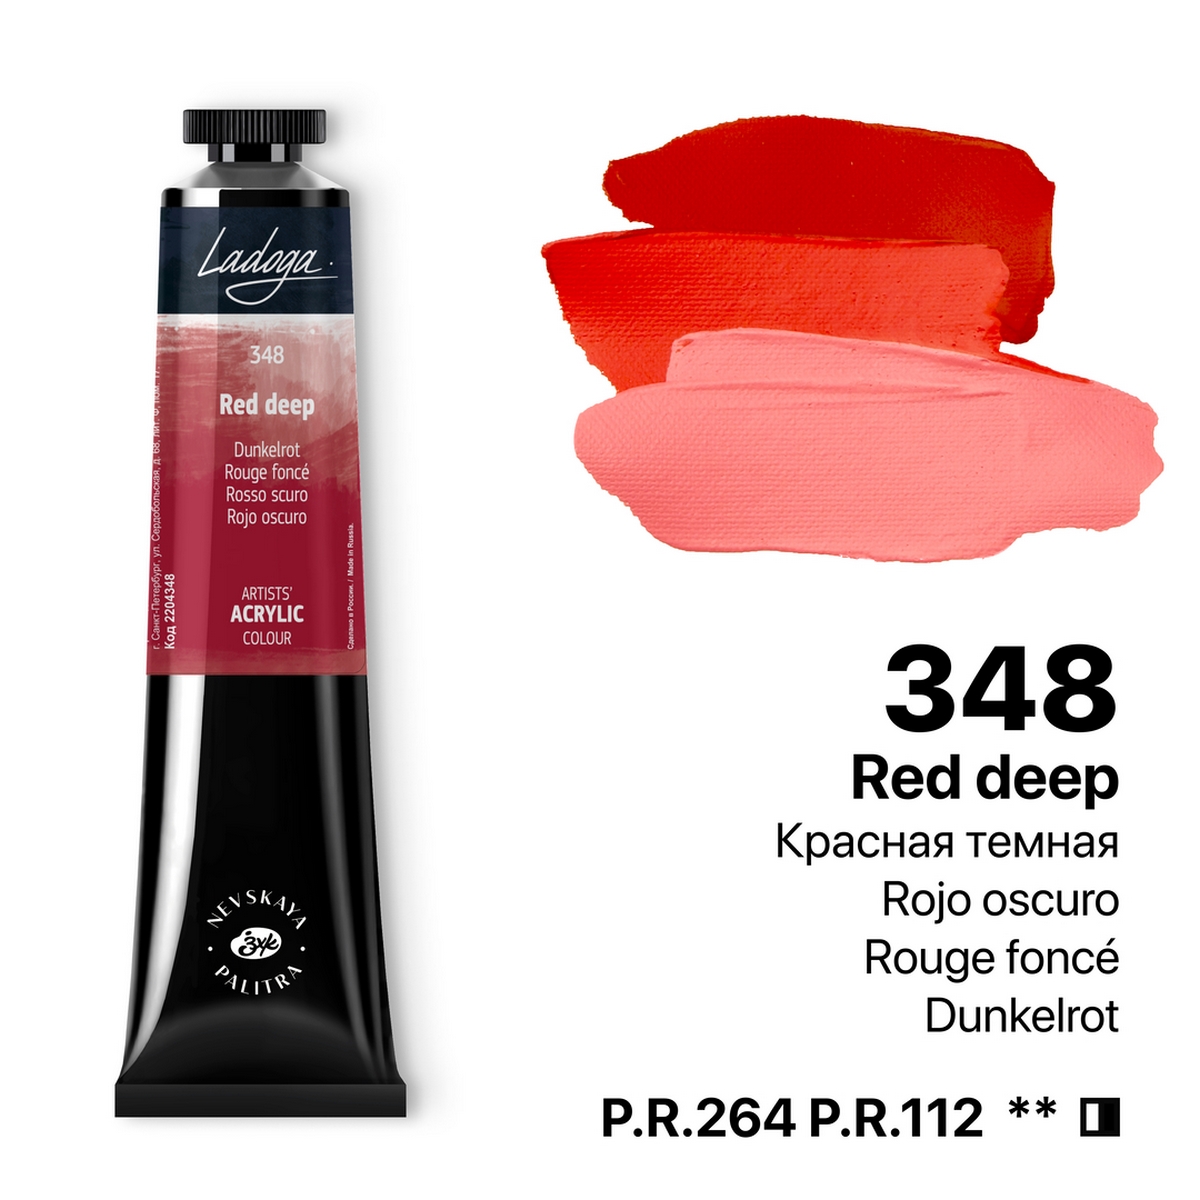 Acrylic colour Ladoga, Red deep, № 348